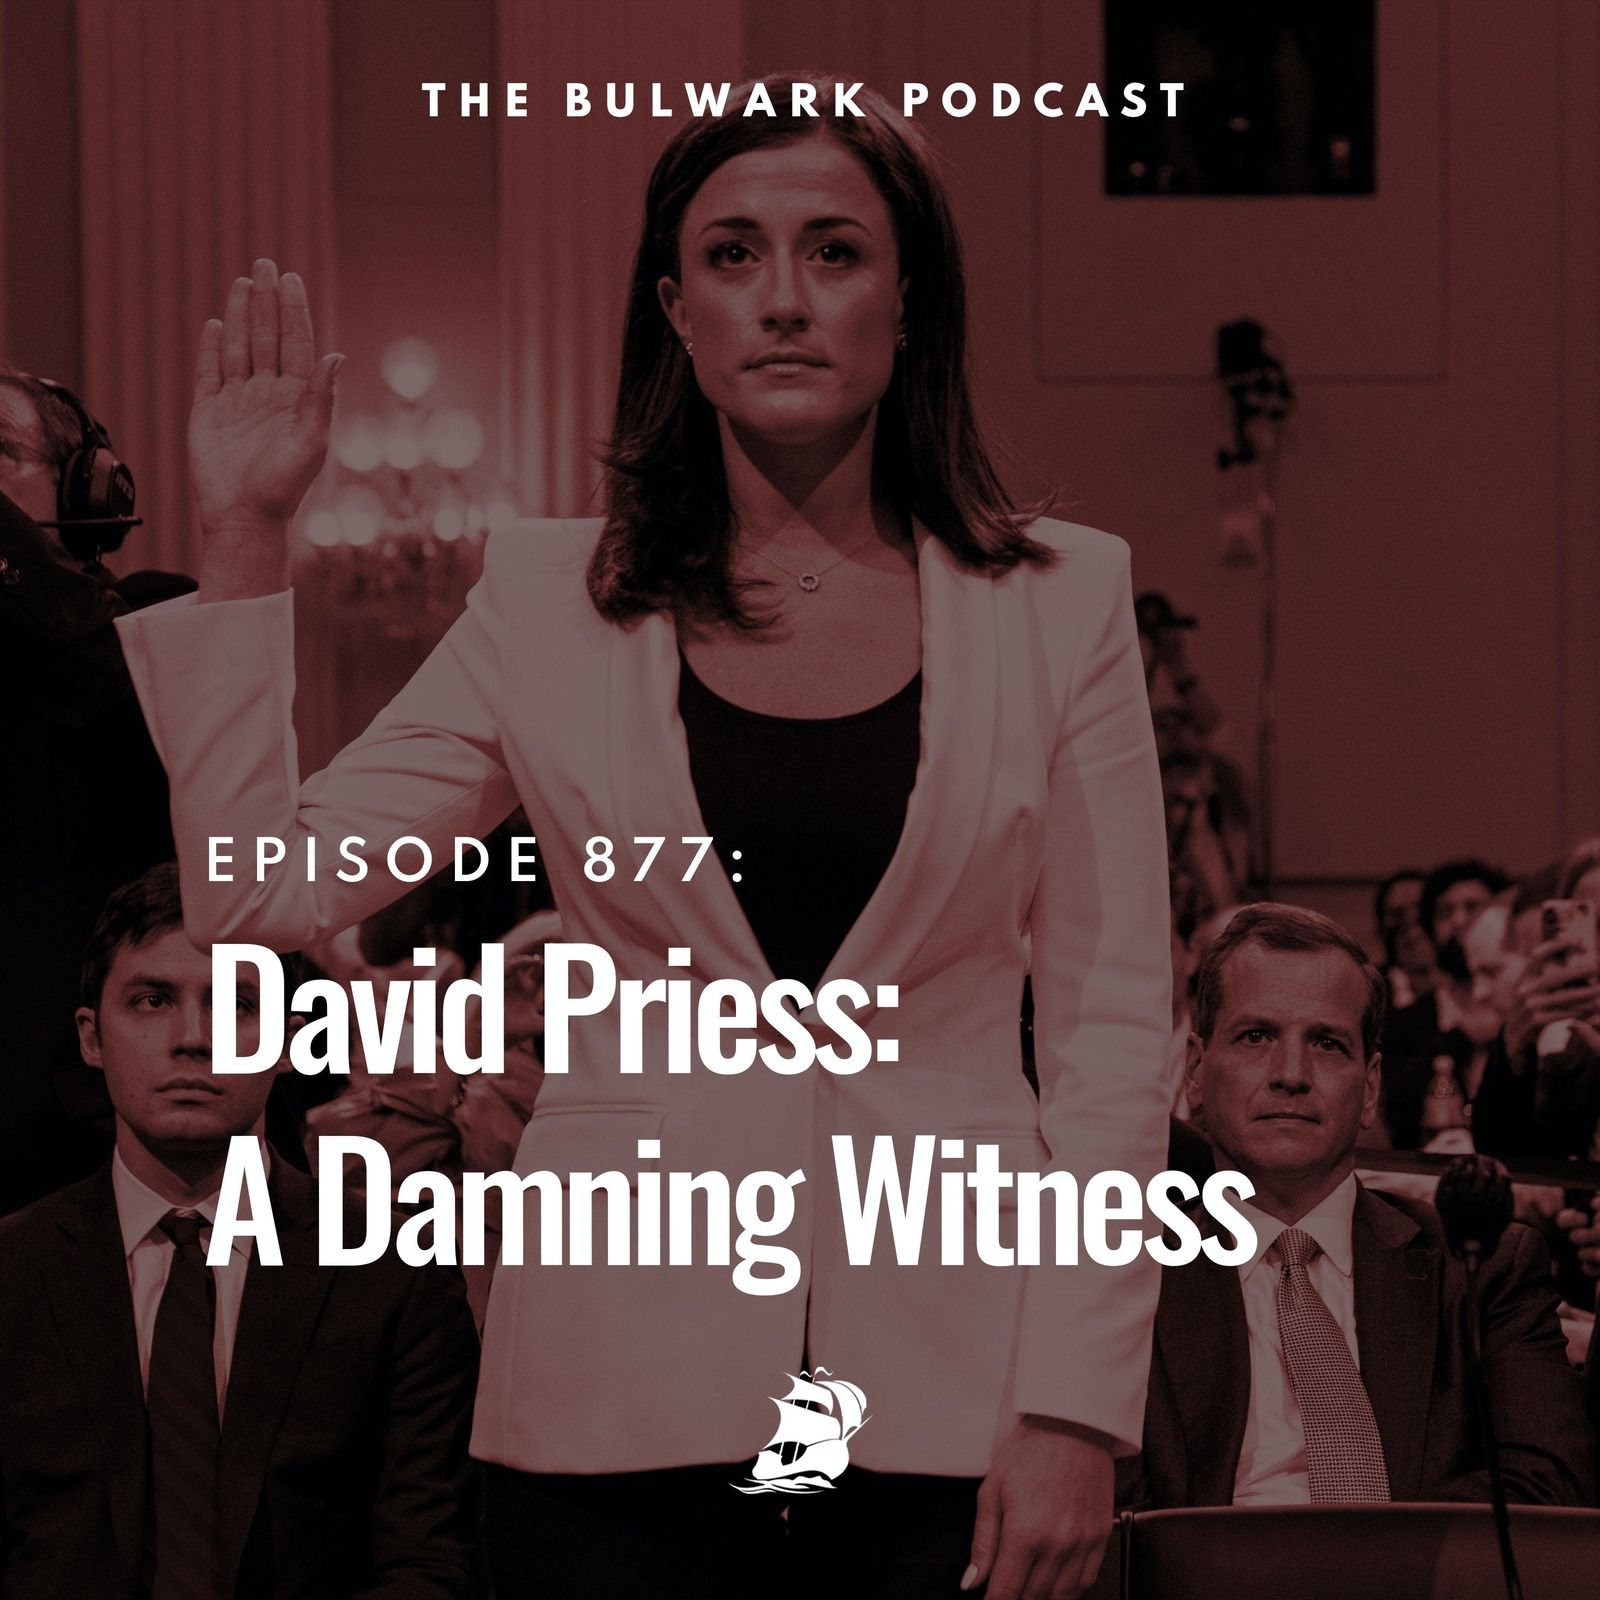 David Priess: A Damning Witness